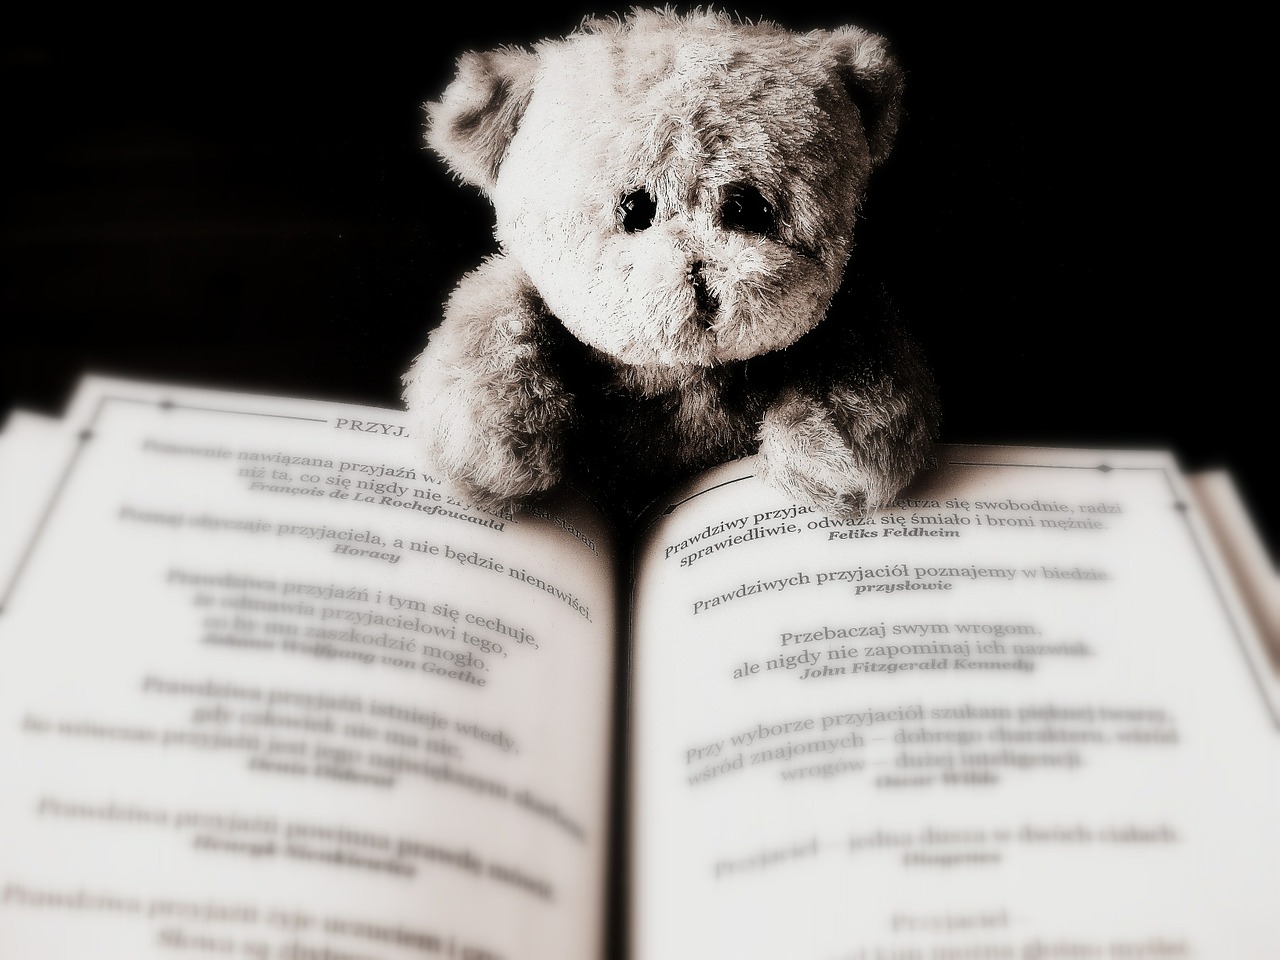 A small teddy bear reading a book.